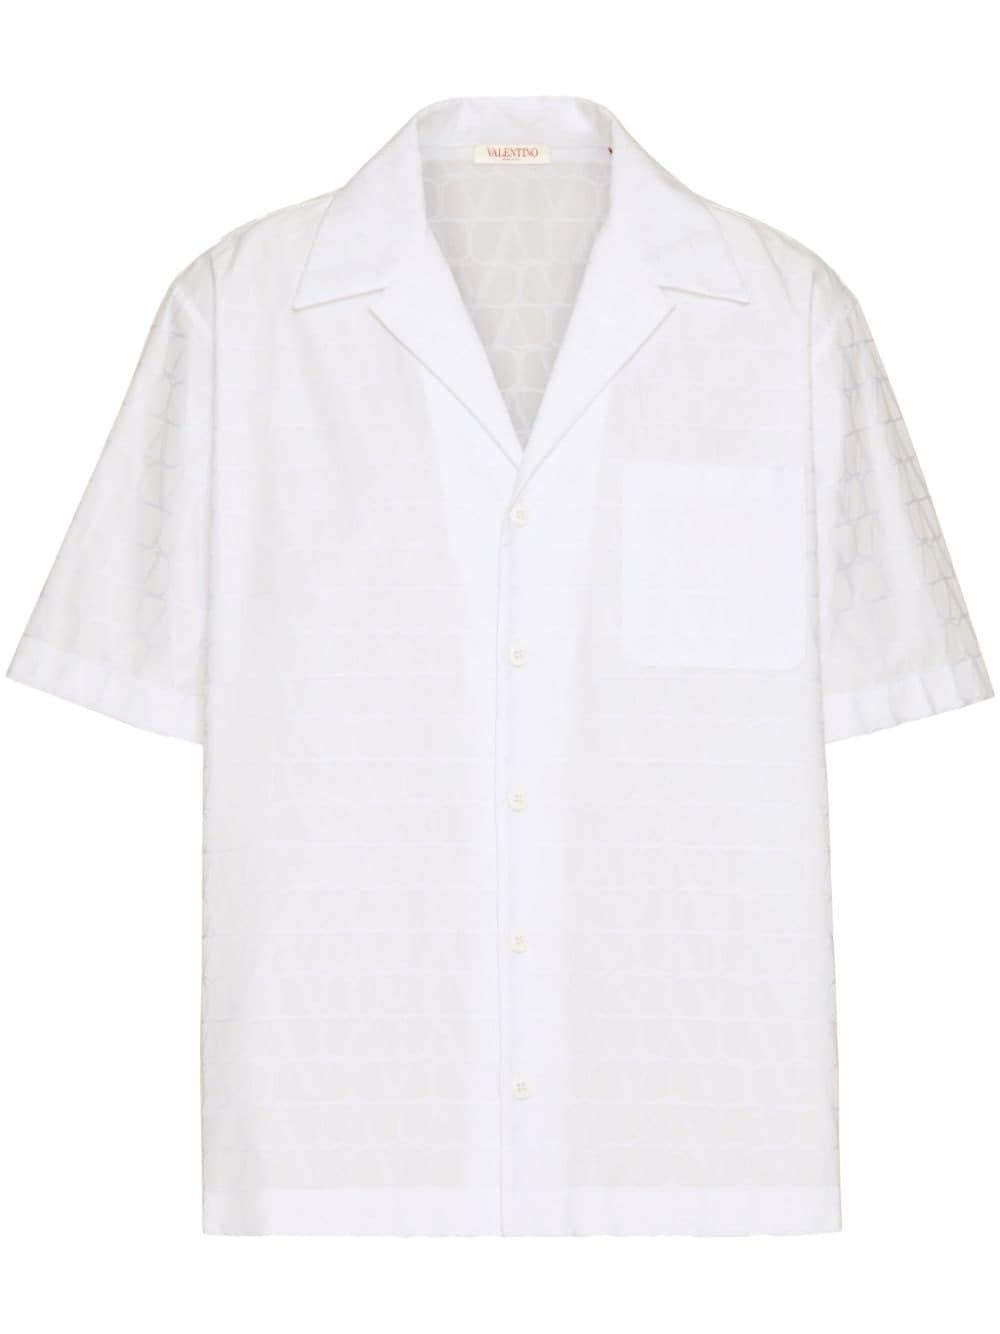 VALENTINO GARAVANI Luxury White Cotton Poplin Jacquard Iconography Shirt for Men